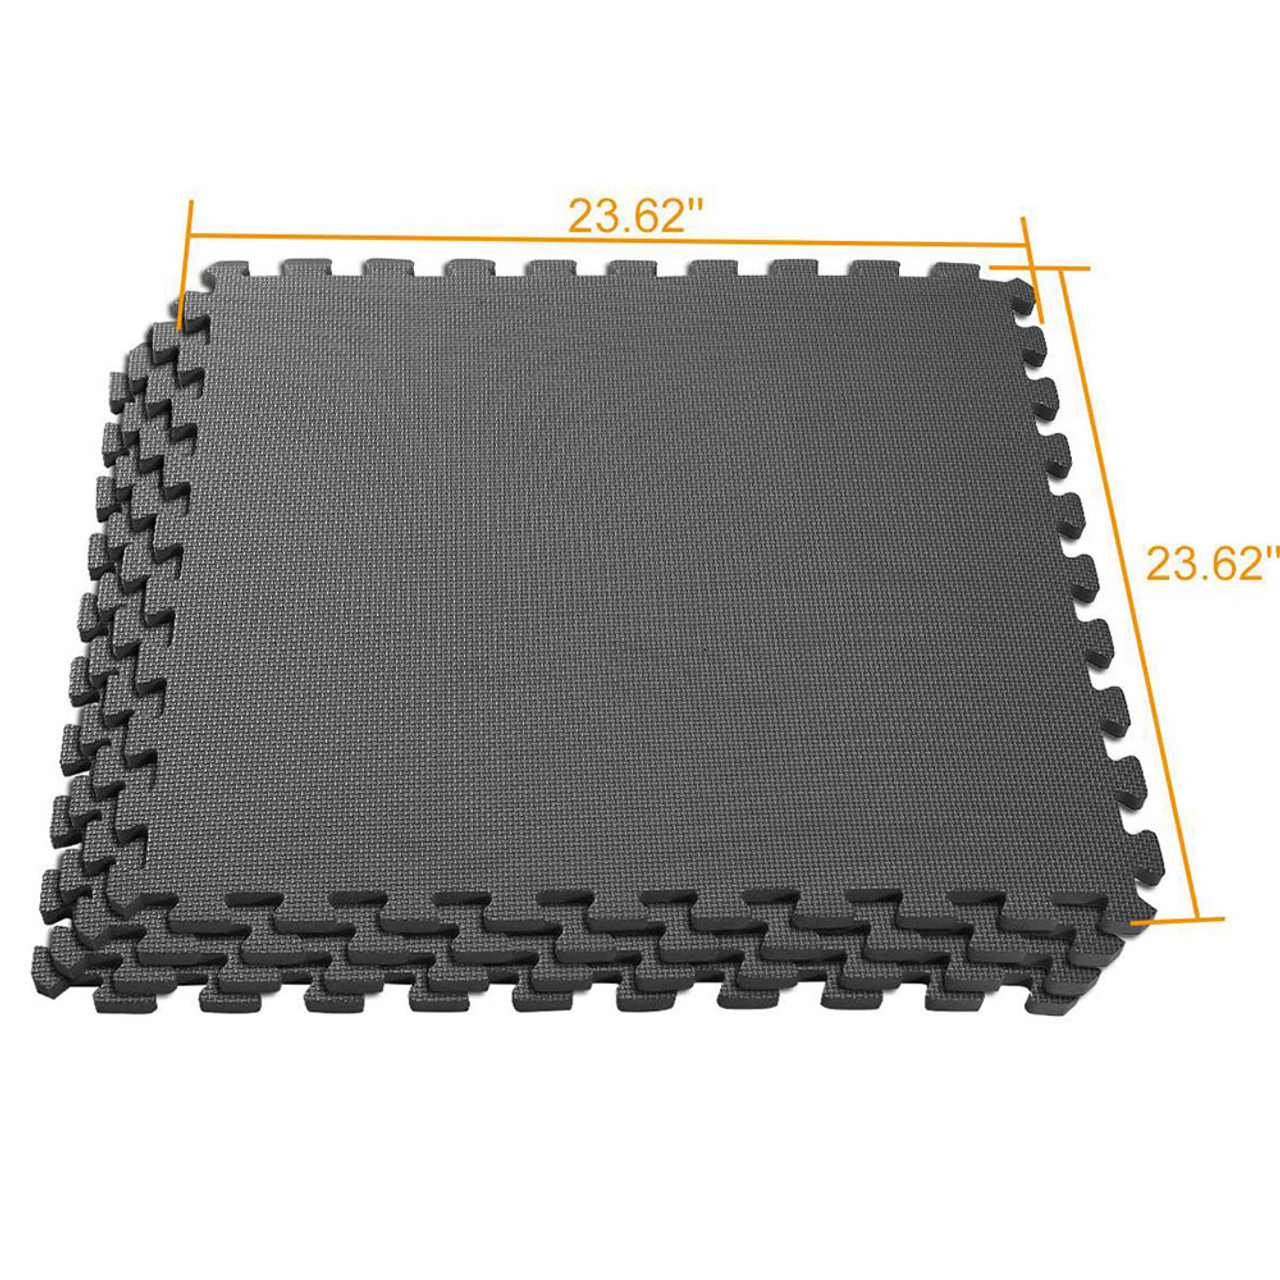 Interlocking EVA Floor Mats (4-Pack) product image